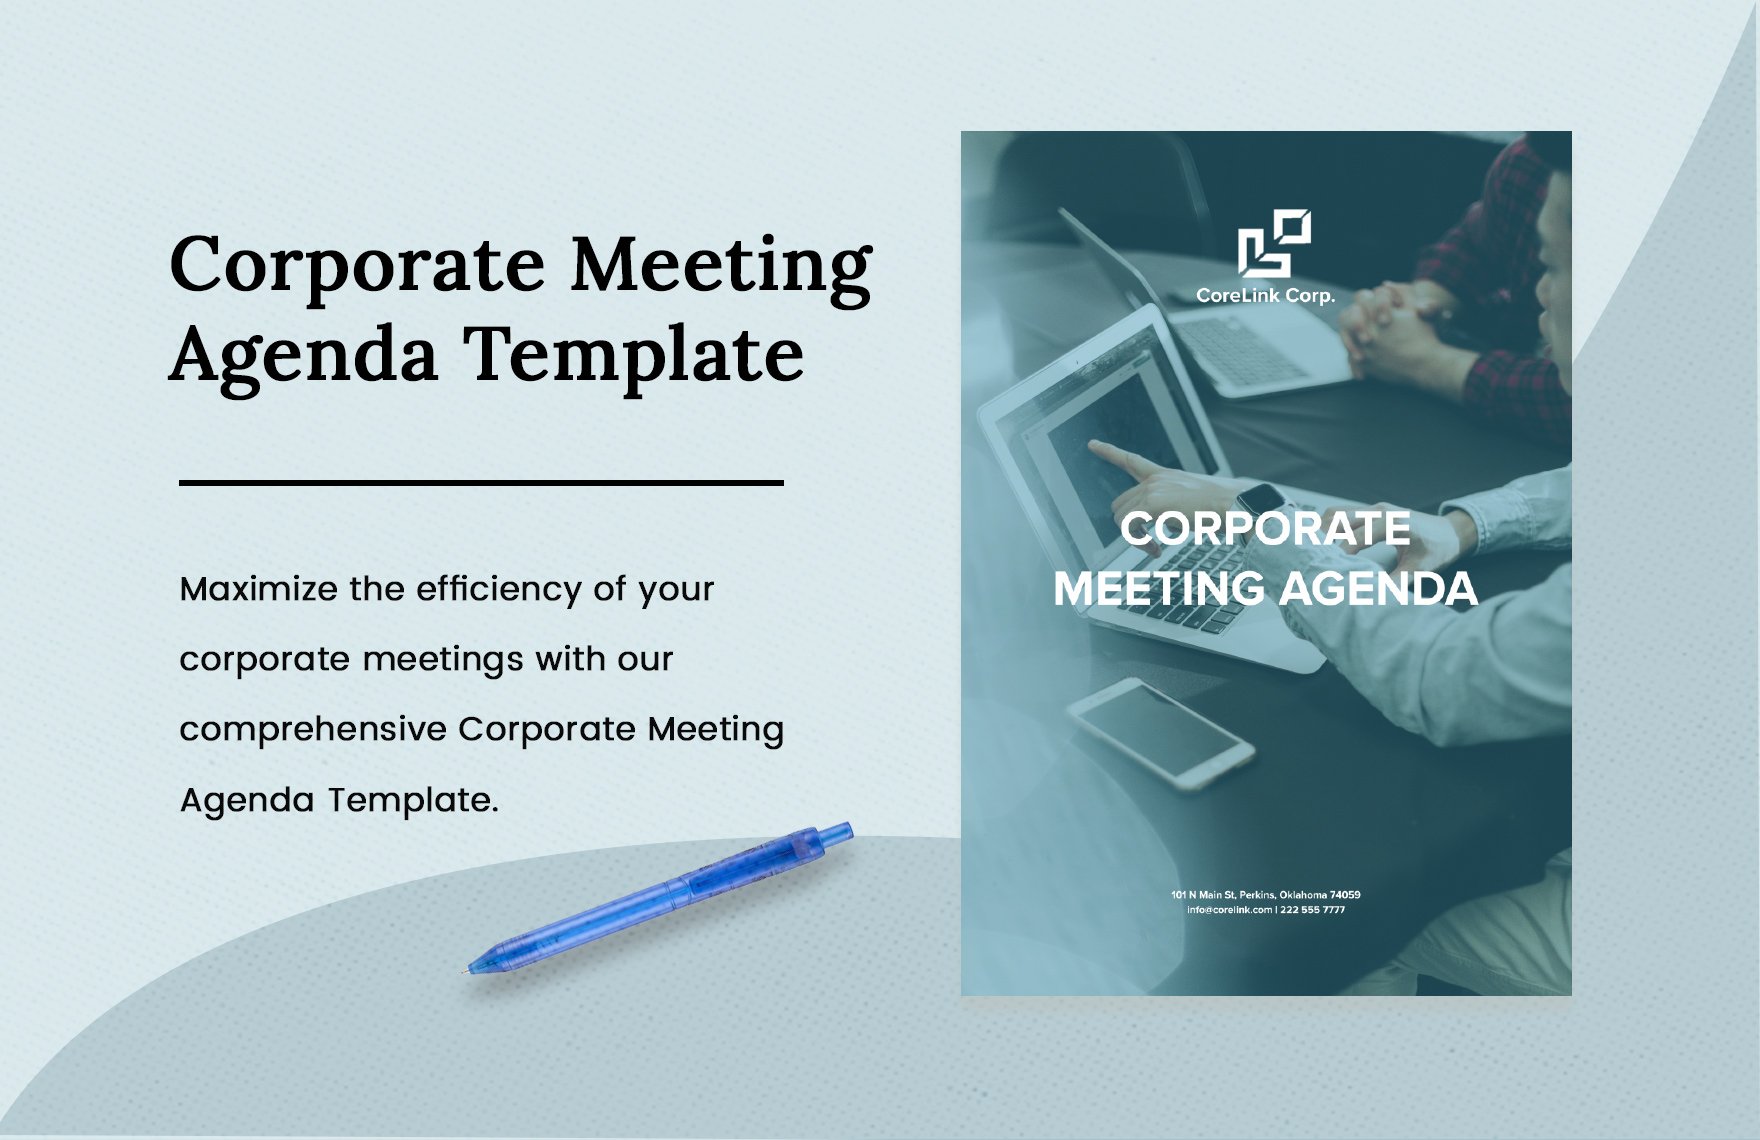 Corporate Meeting Agenda Template